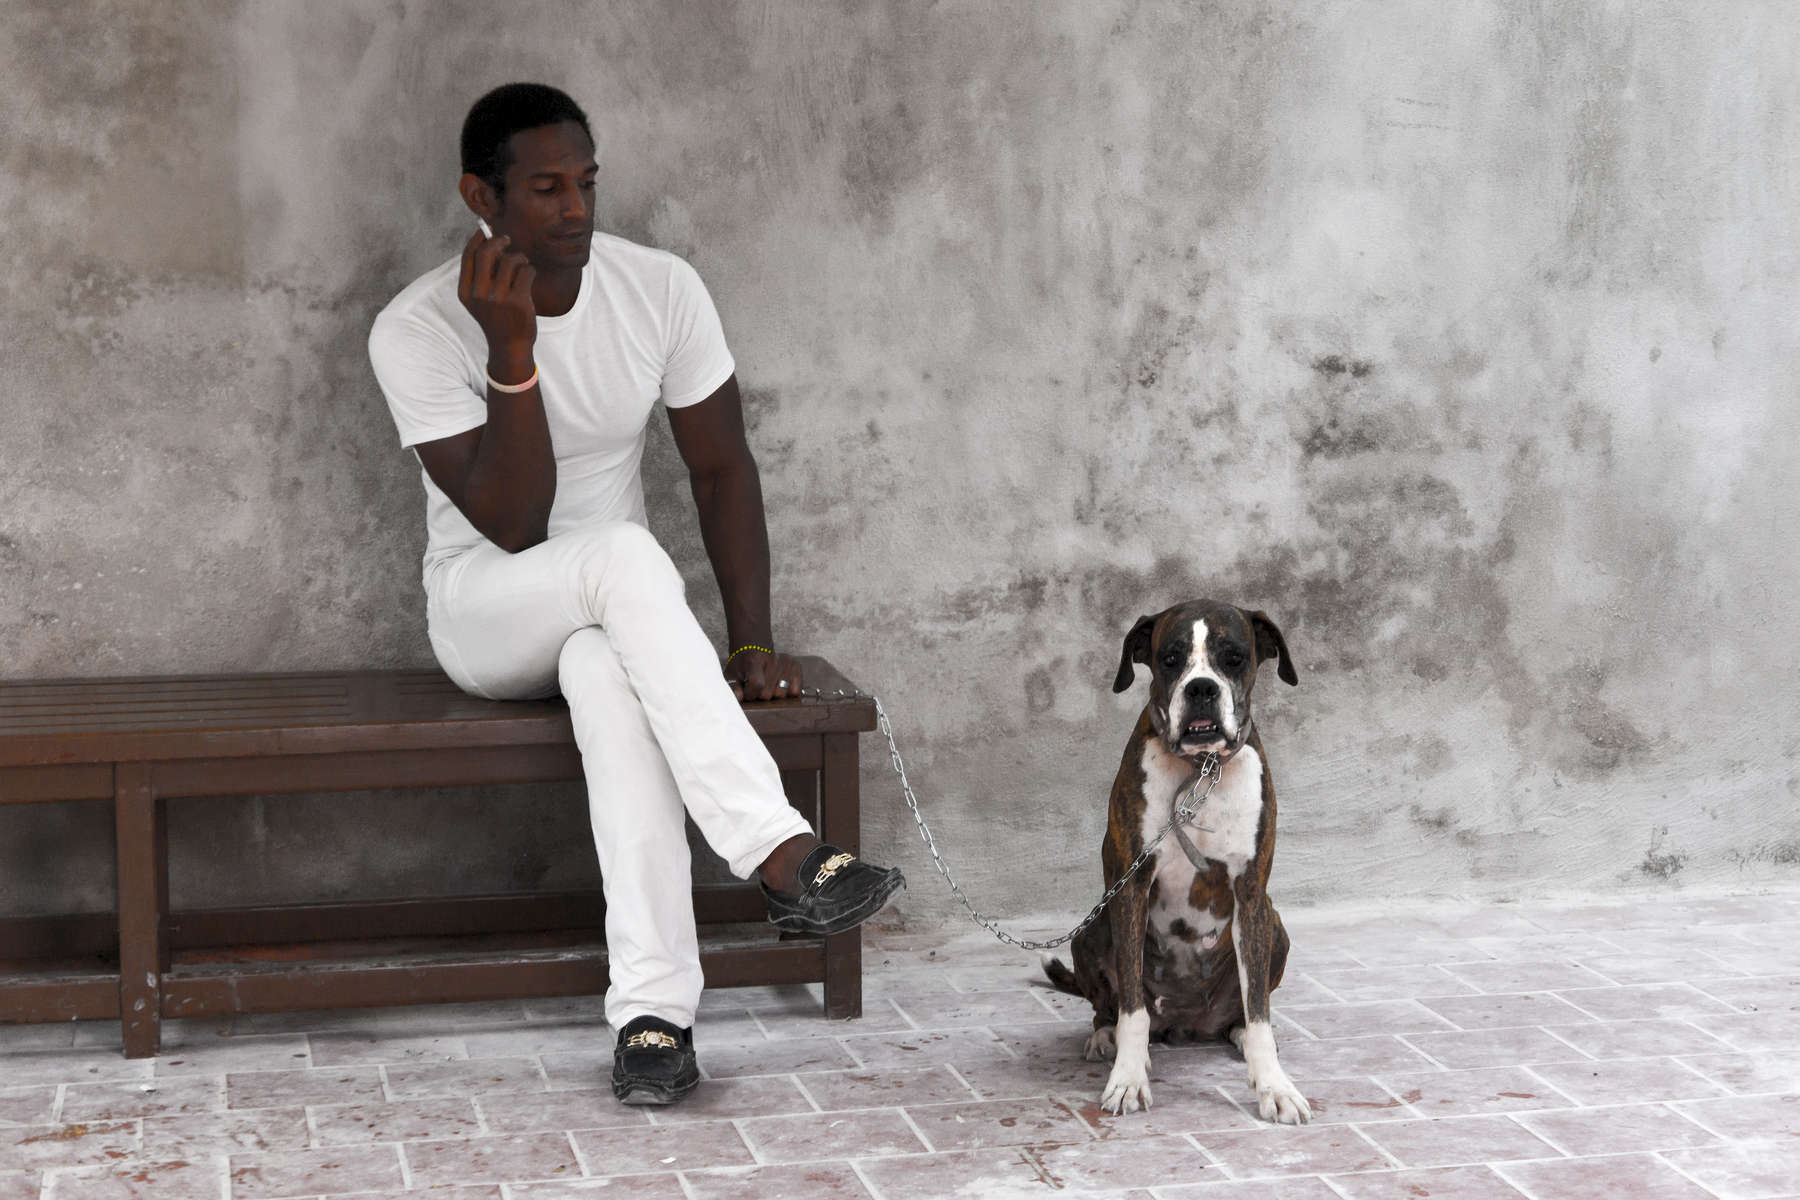 Cuba_28-man-with-dog